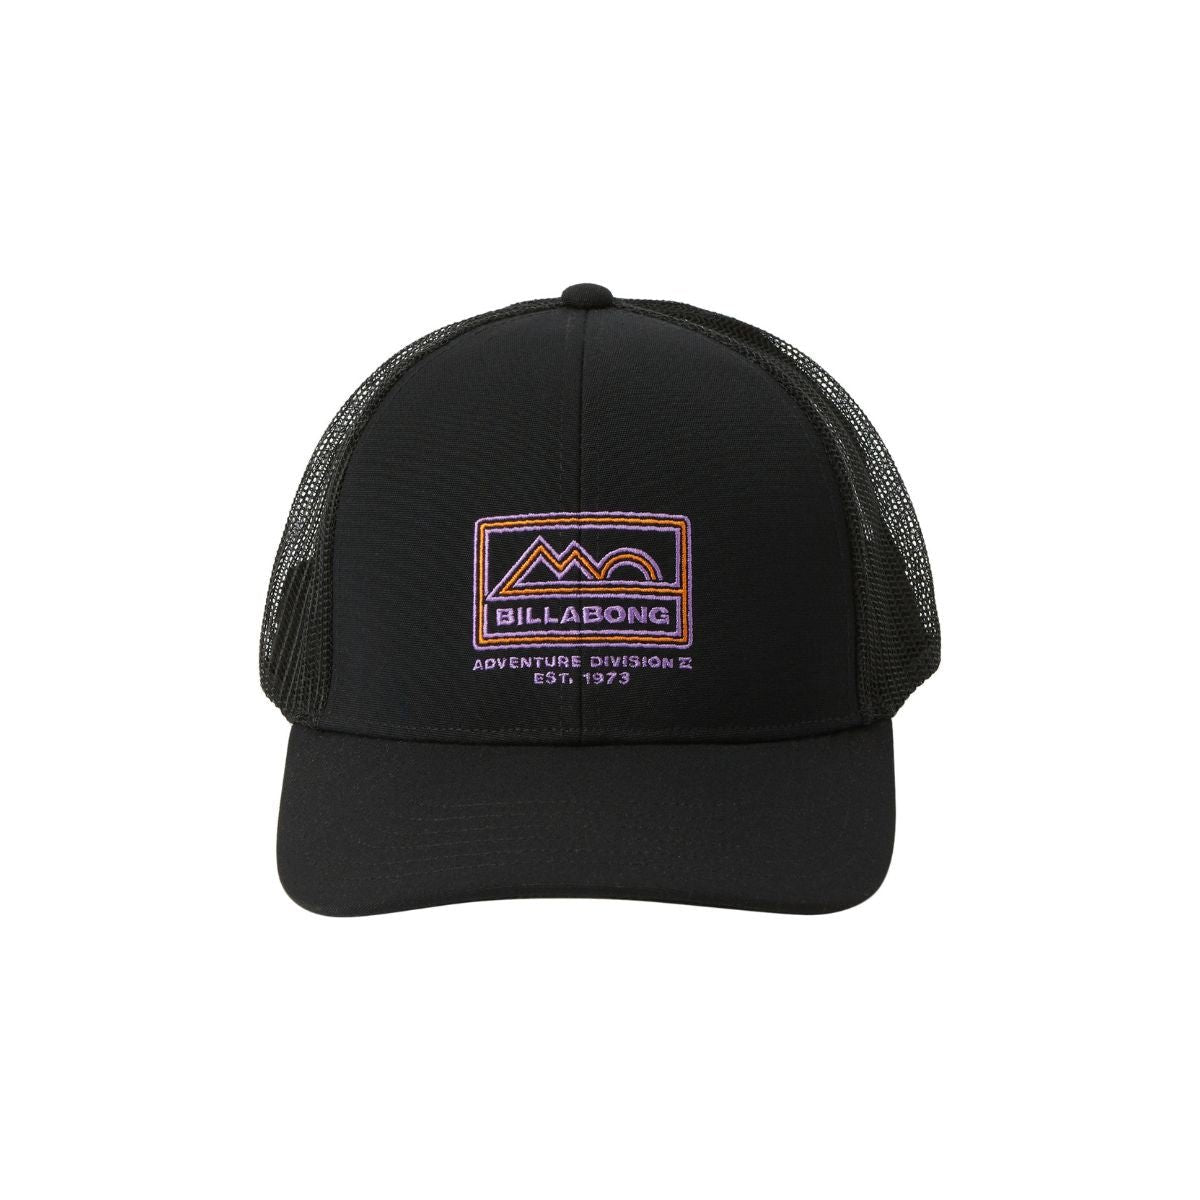 Billabong A/Div Walled Trucker Hat Black in